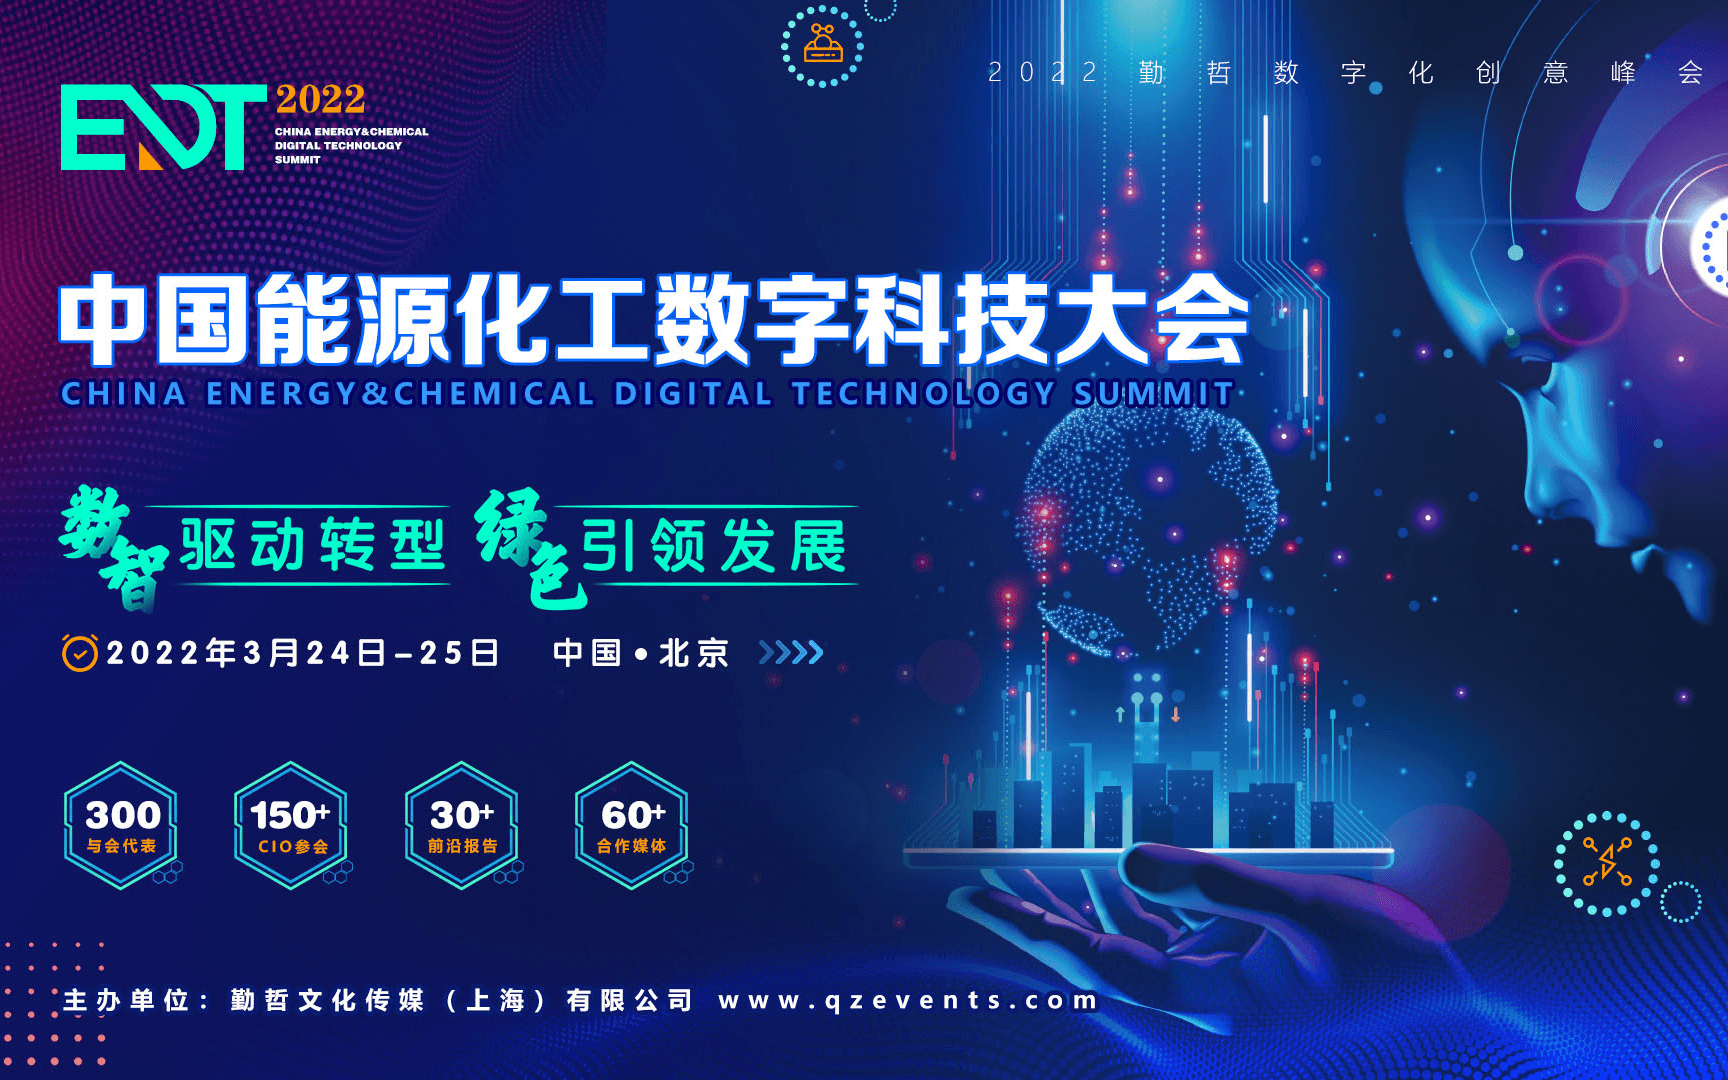 EDT 2022中國能源化工數字科技大會